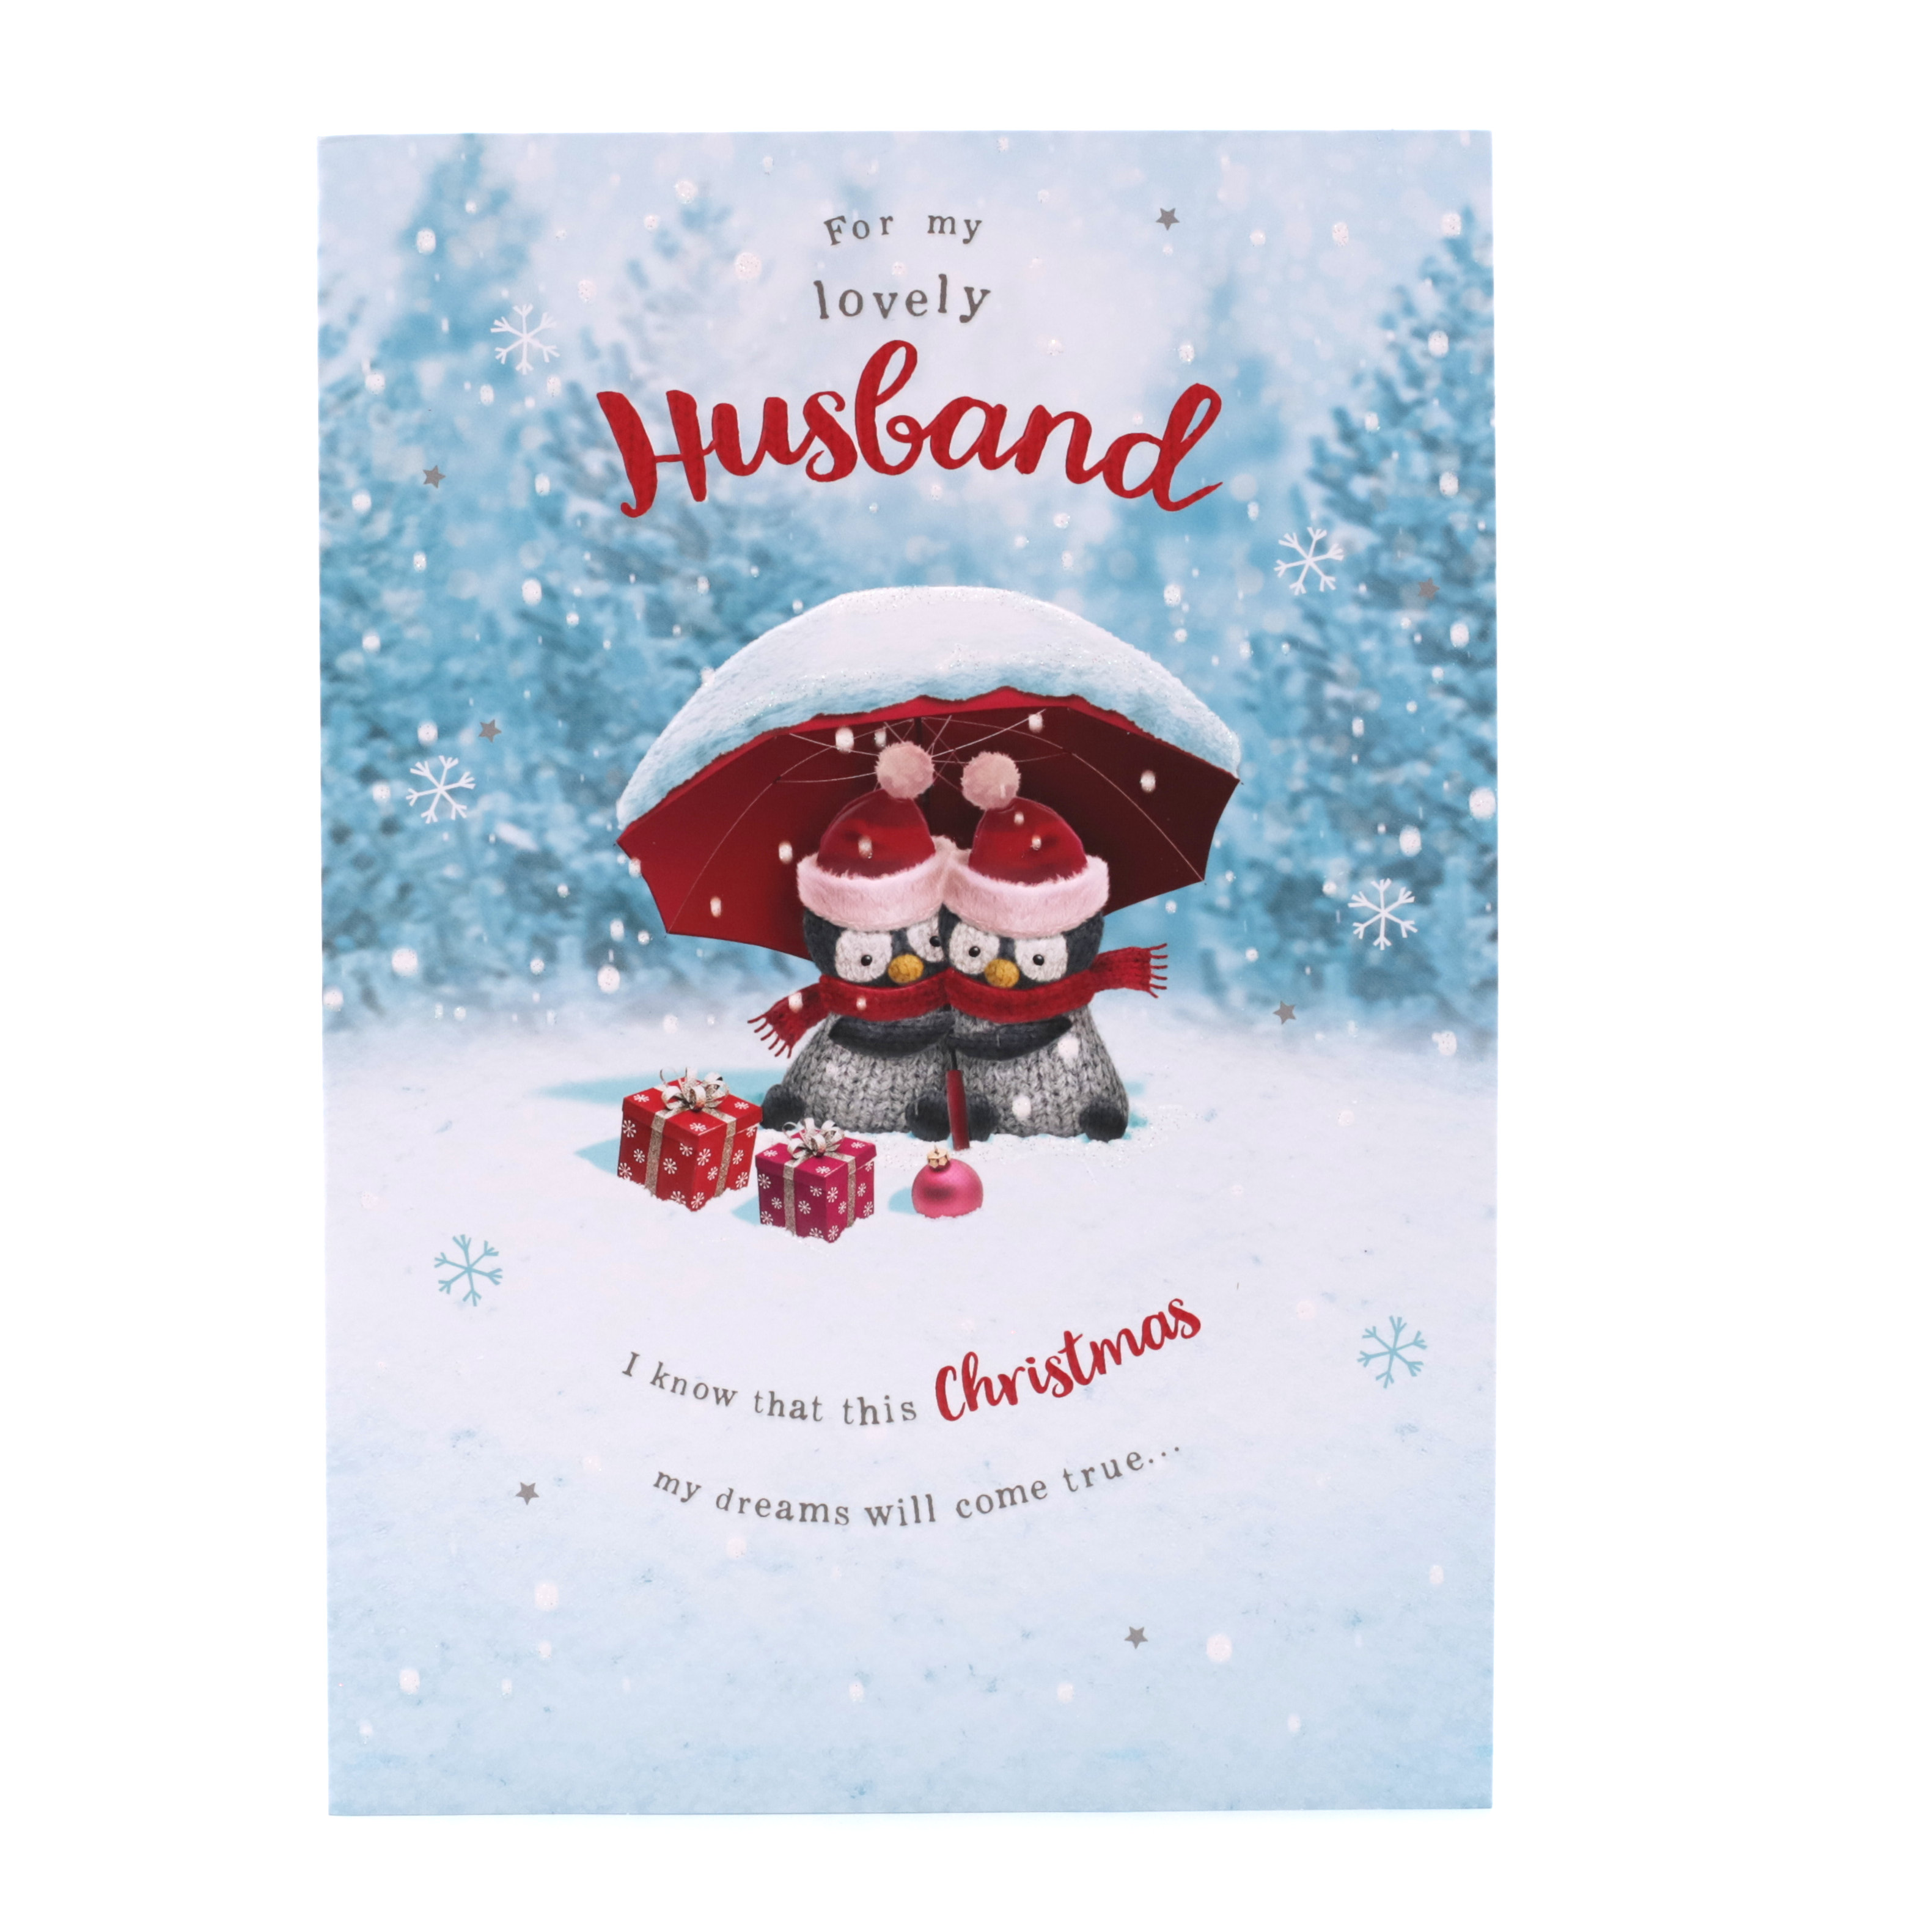 Christmas Card - Lovely Husband, Christmas Dreams Come True